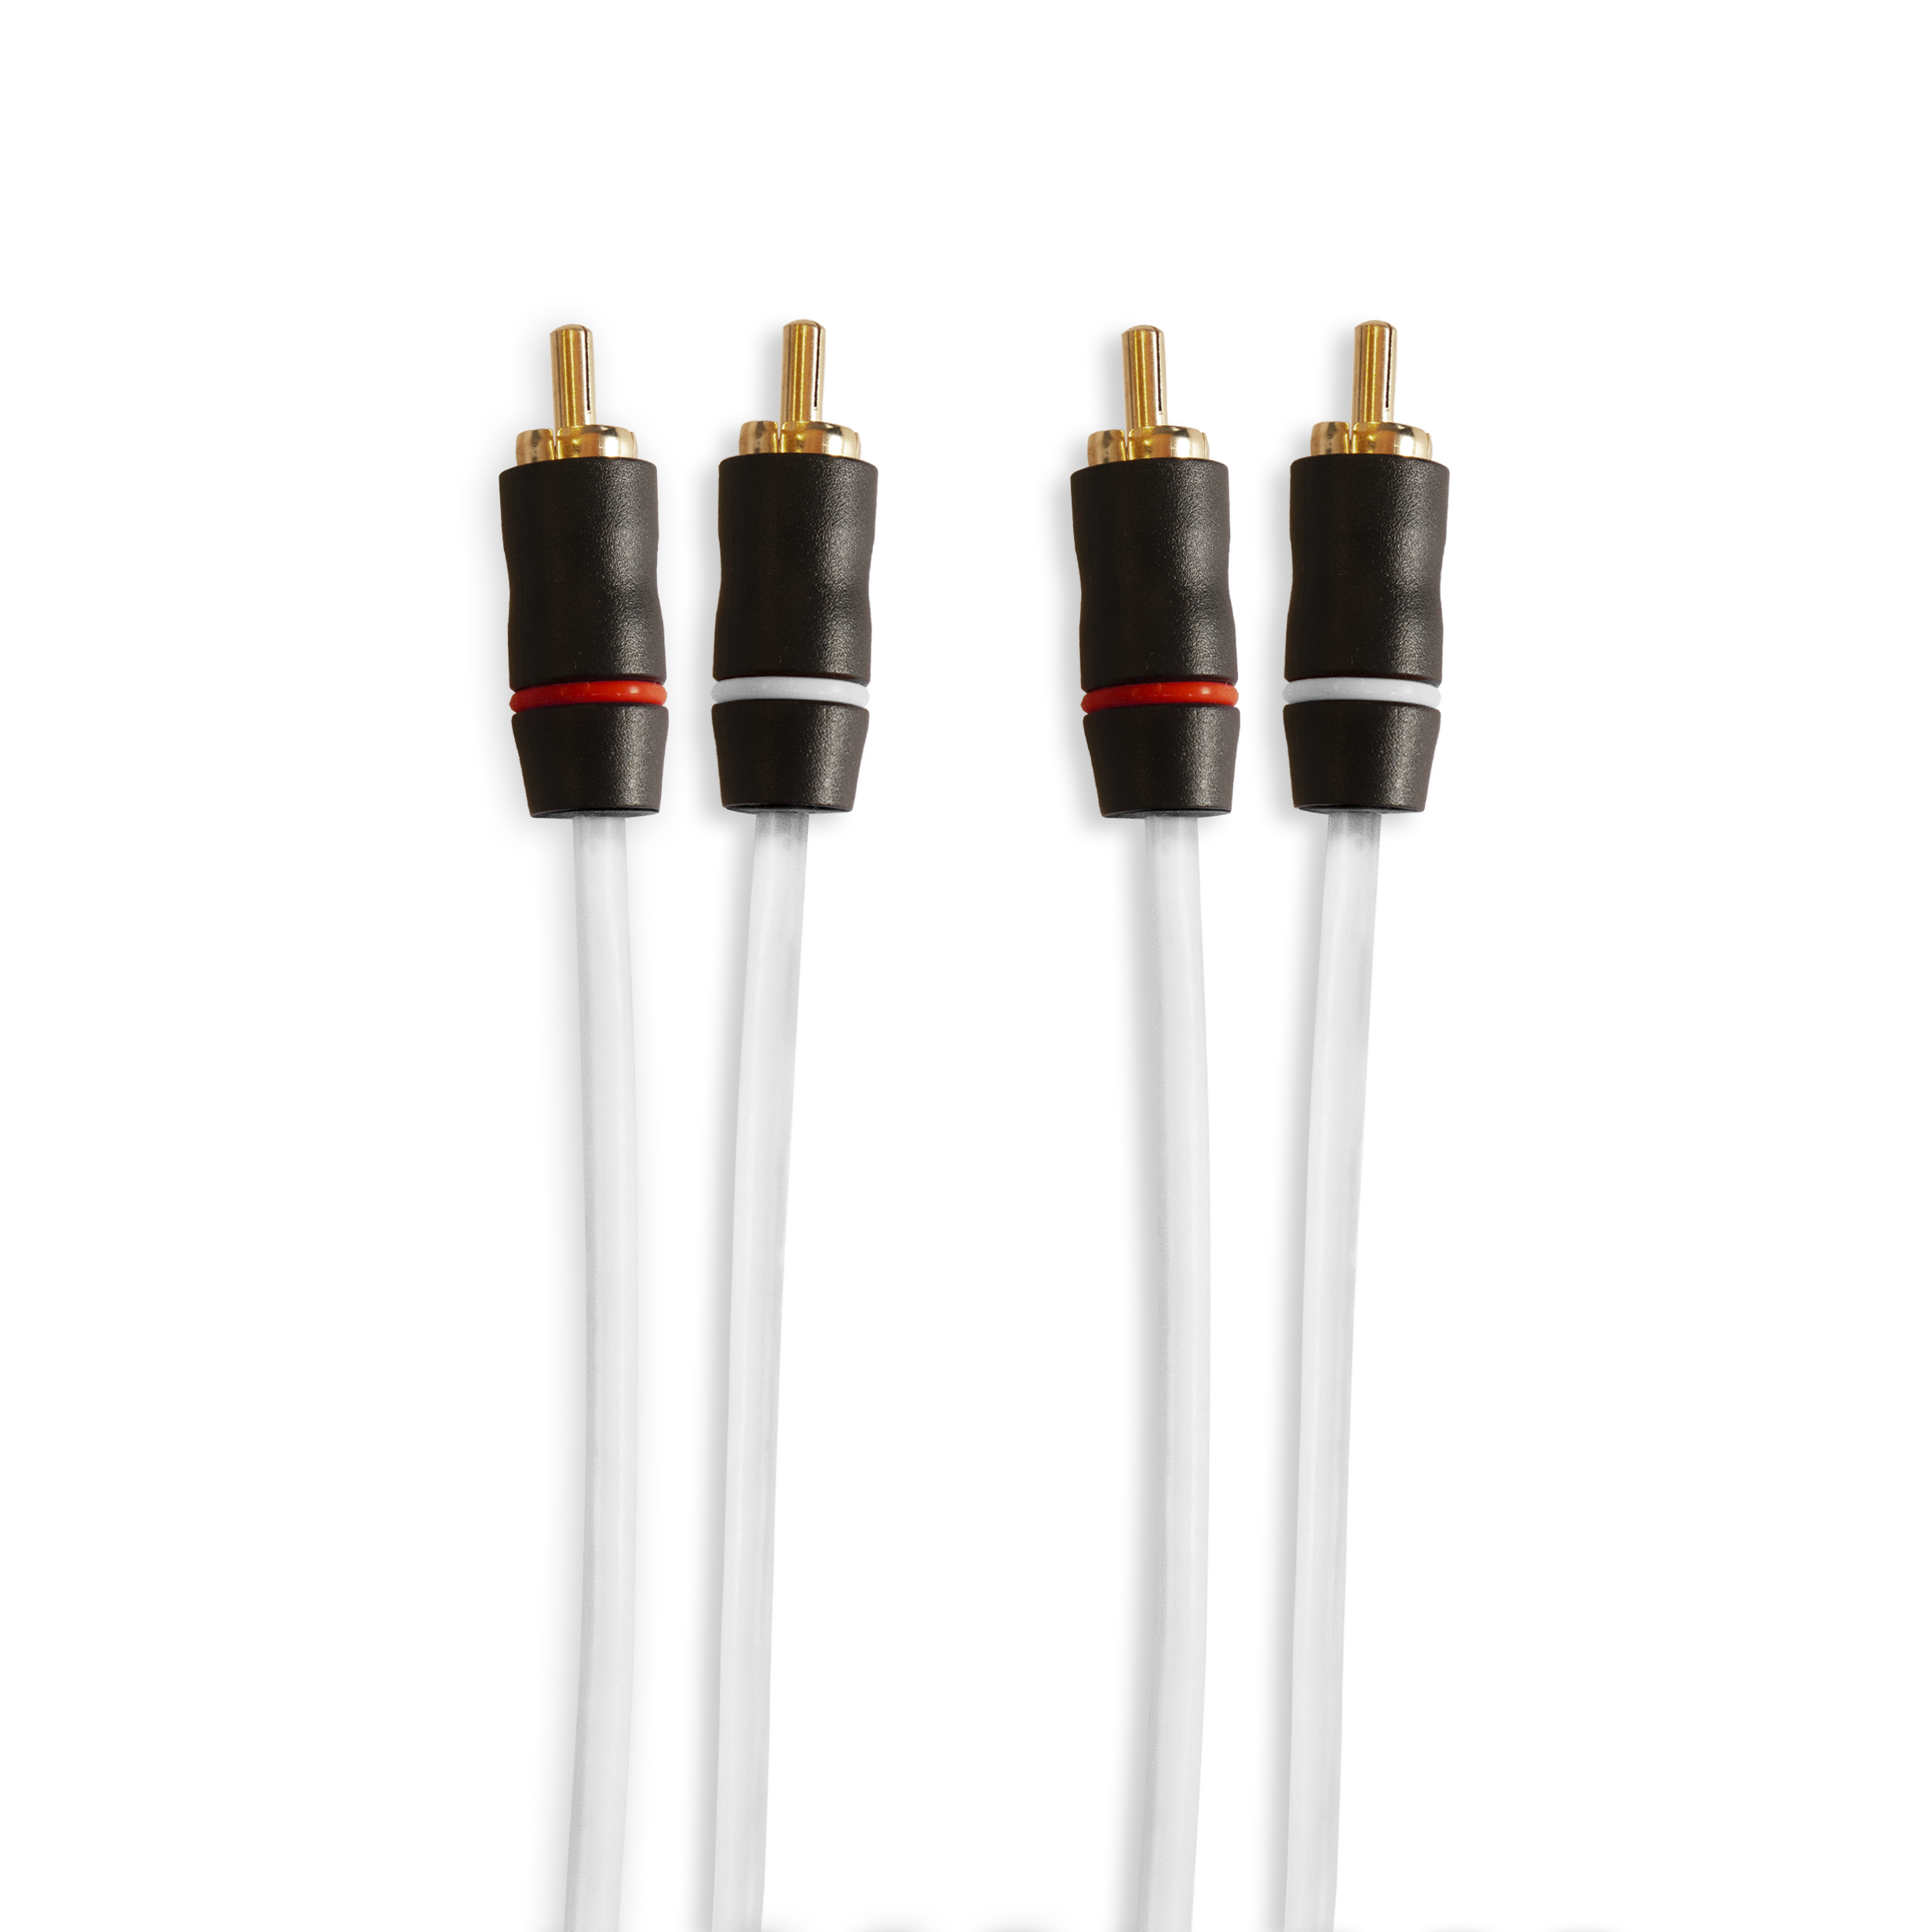 Garmin Fusion® RCA kabler, 2 kanaler, 6 fod (1,83 m) kabel